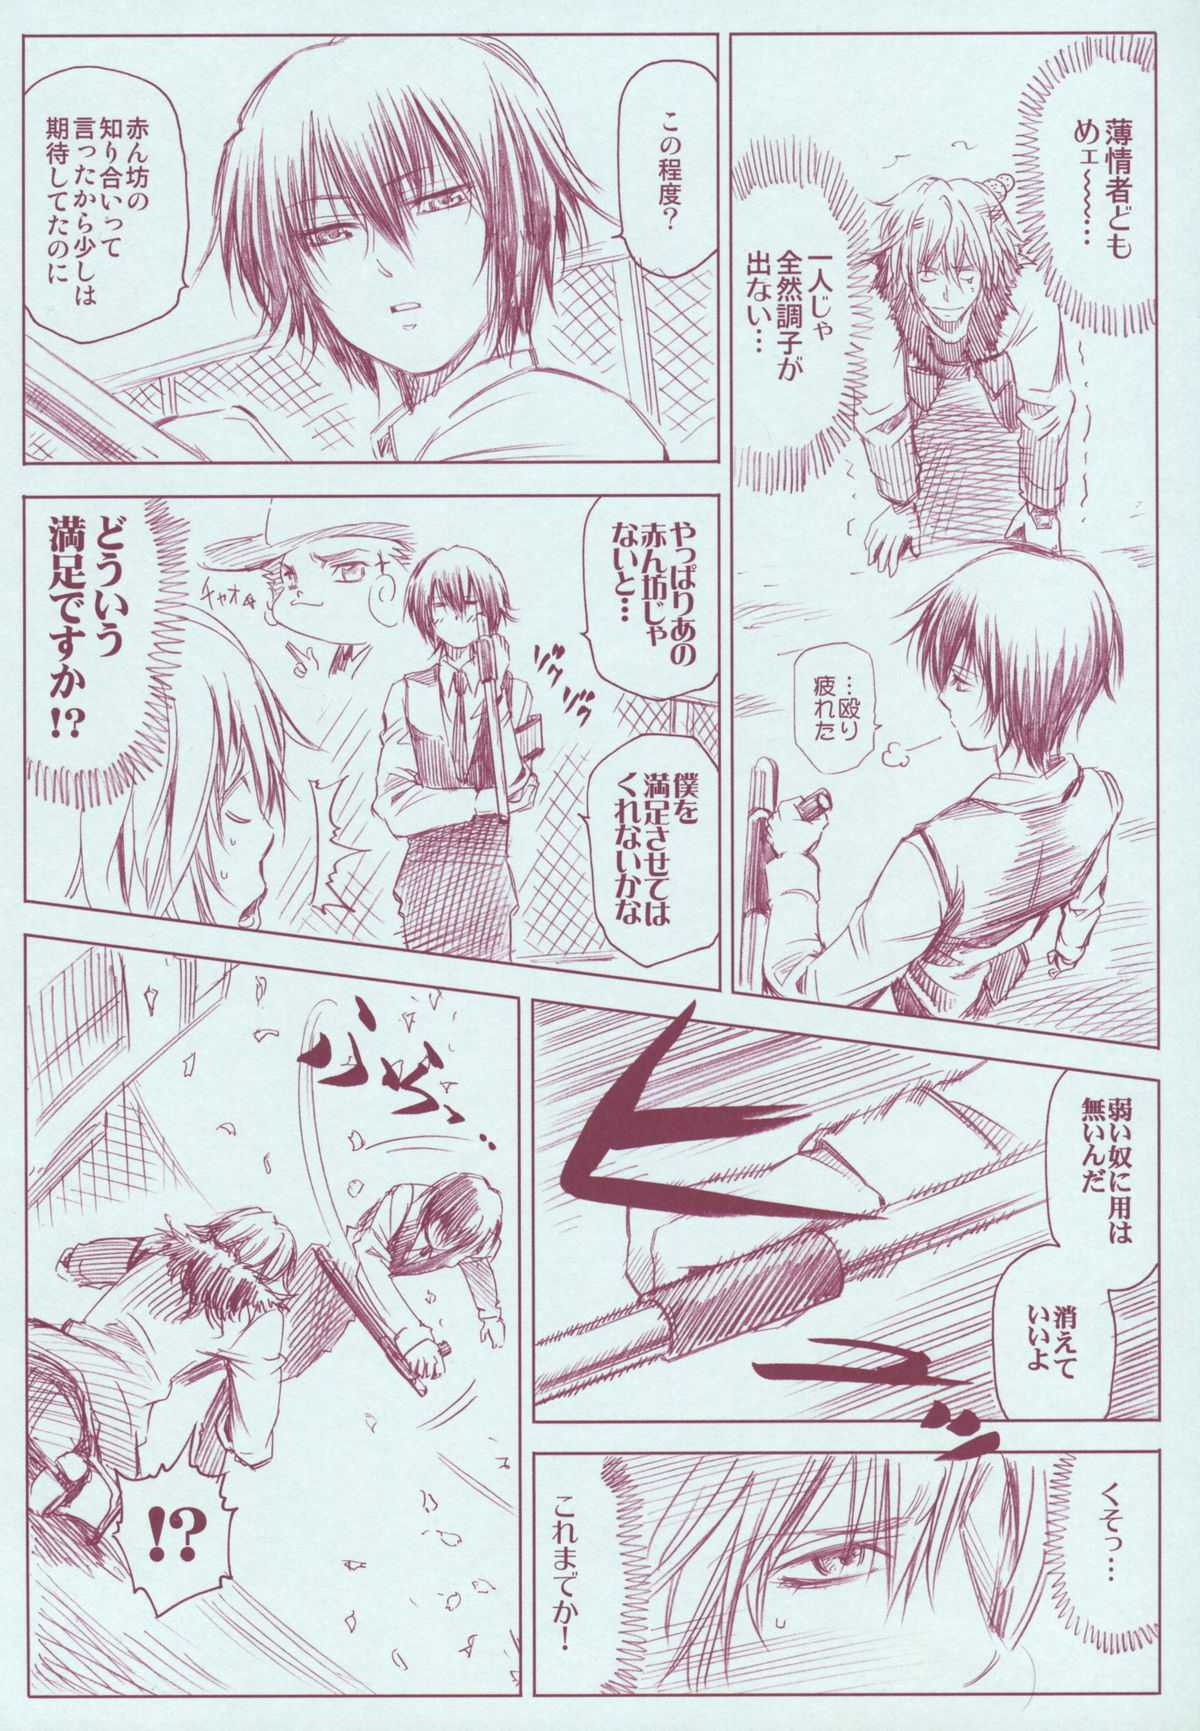 (C72) [OMEGA 2-D (Hibino Tomoki, Shima Seiryuu)] JAJAUMA Scarlet Venus (Katekyoo Hitman REBORN!) [alternative scan] (C72) [OMEGA 2-D (日比野友輝、嶋成龍)] JAJAUMA Scarlet Venus (家庭教師ヒットマンREBORN!)